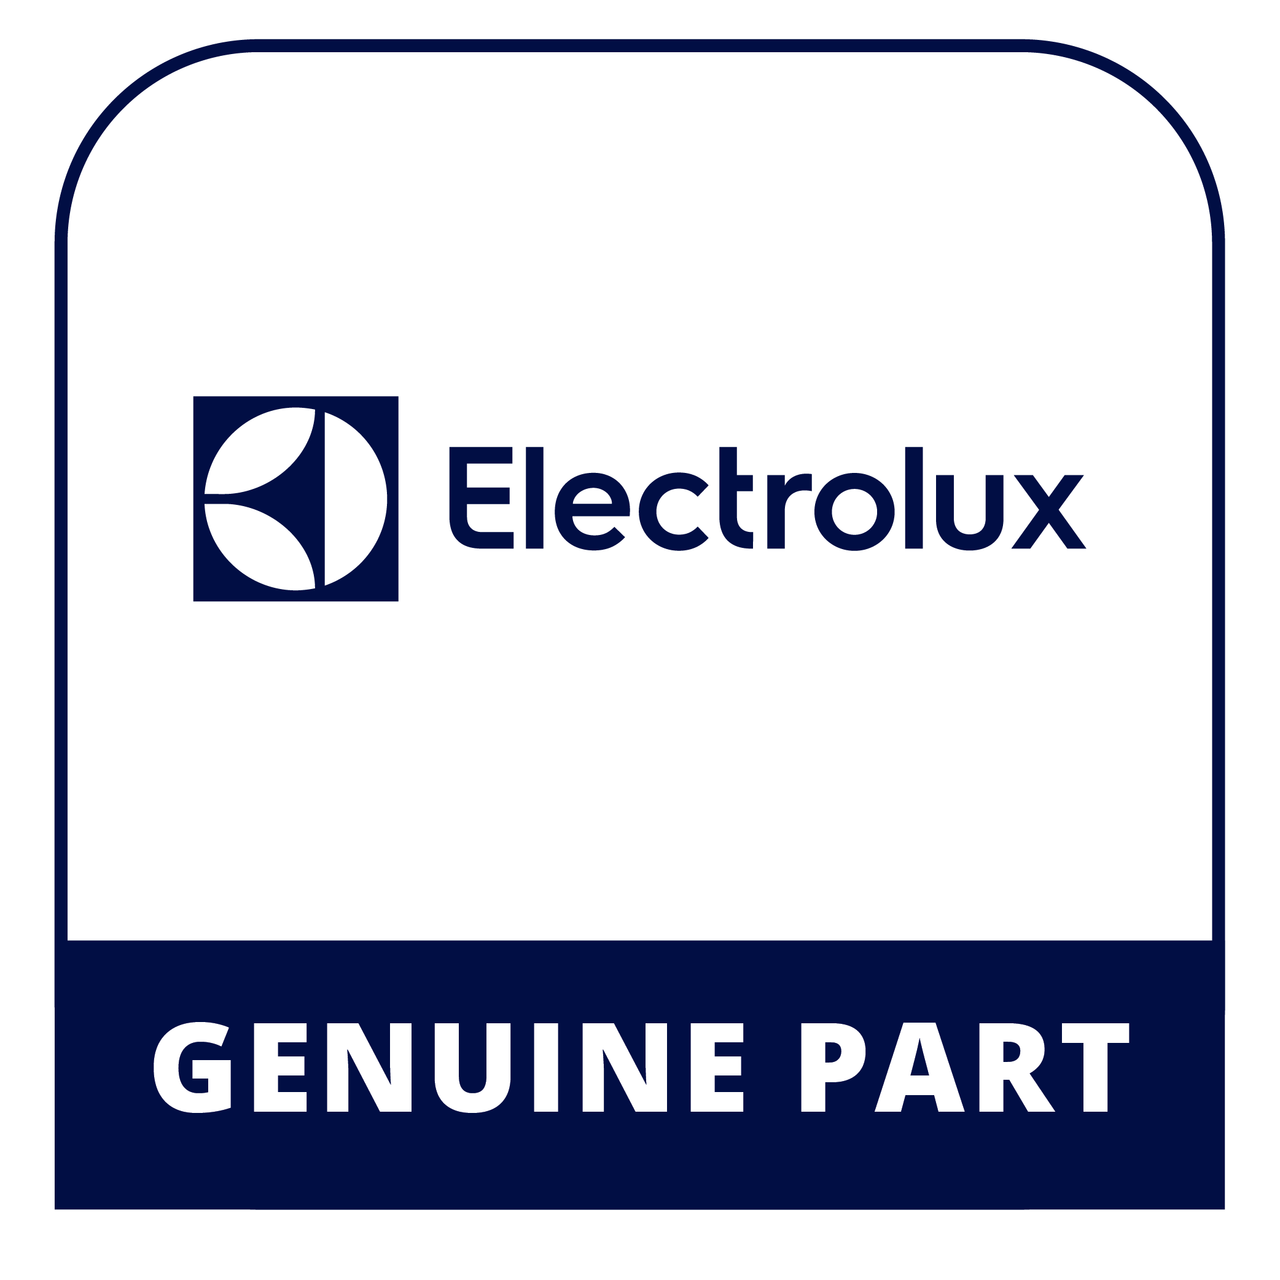 Frigidaire - Electrolux 316574100 Cover - Genuine Electrolux Part